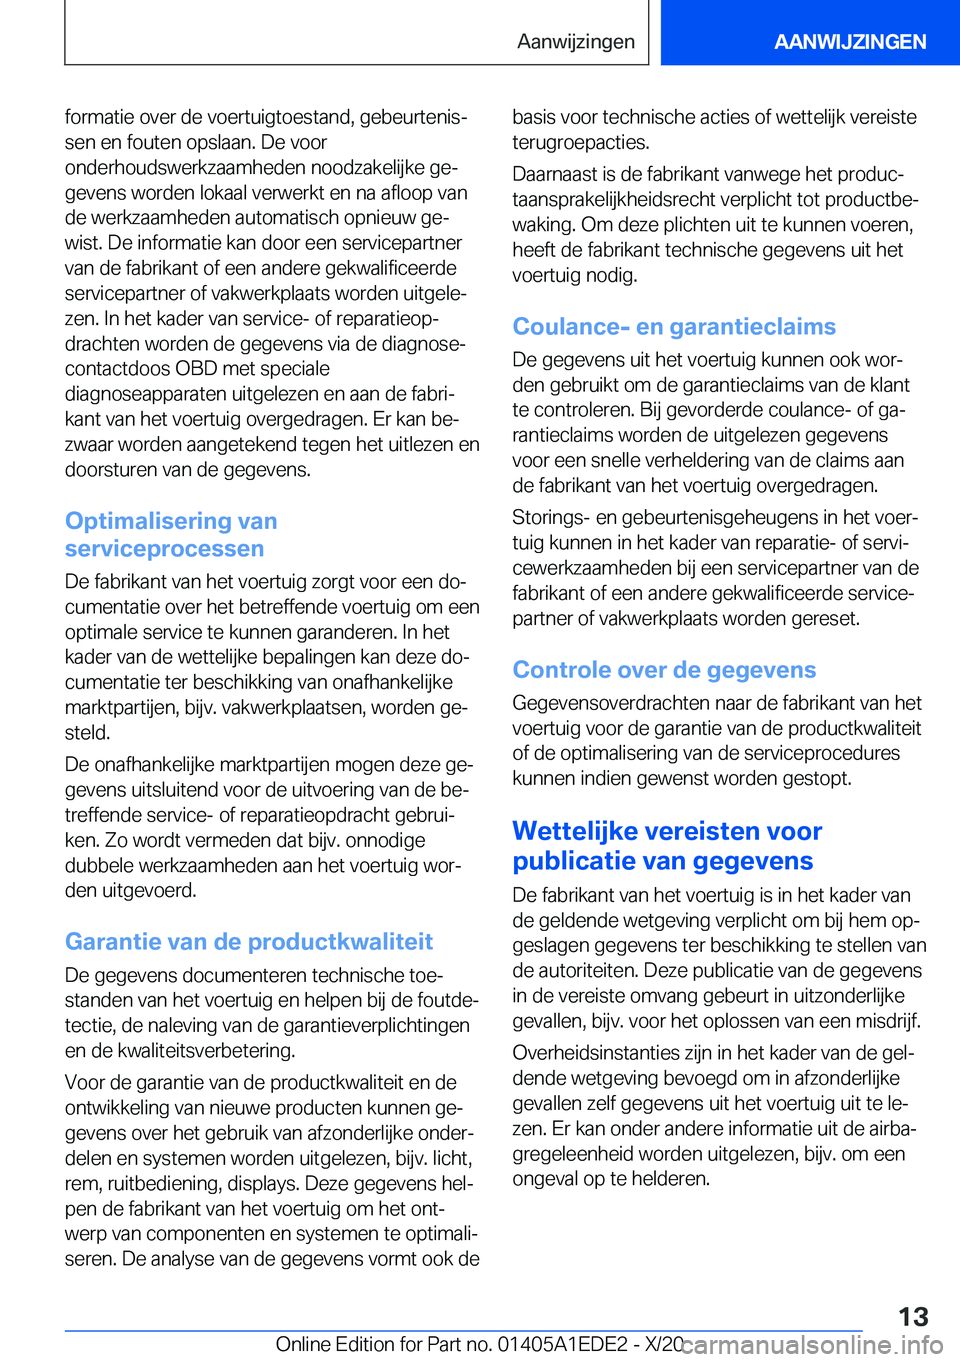 BMW 8 SERIES CONVERTIBLE 2021  Instructieboekjes (in Dutch) �f�o�r�m�a�t�i�e��o�v�e�r��d�e��v�o�e�r�t�u�i�g�t�o�e�s�t�a�n�d�,��g�e�b�e�u�r�t�e�n�i�sj�s�e�n��e�n��f�o�u�t�e�n��o�p�s�l�a�a�n�.��D�e��v�o�o�r
�o�n�d�e�r�h�o�u�d�s�w�e�r�k�z�a�a�m�h�e�d�e�